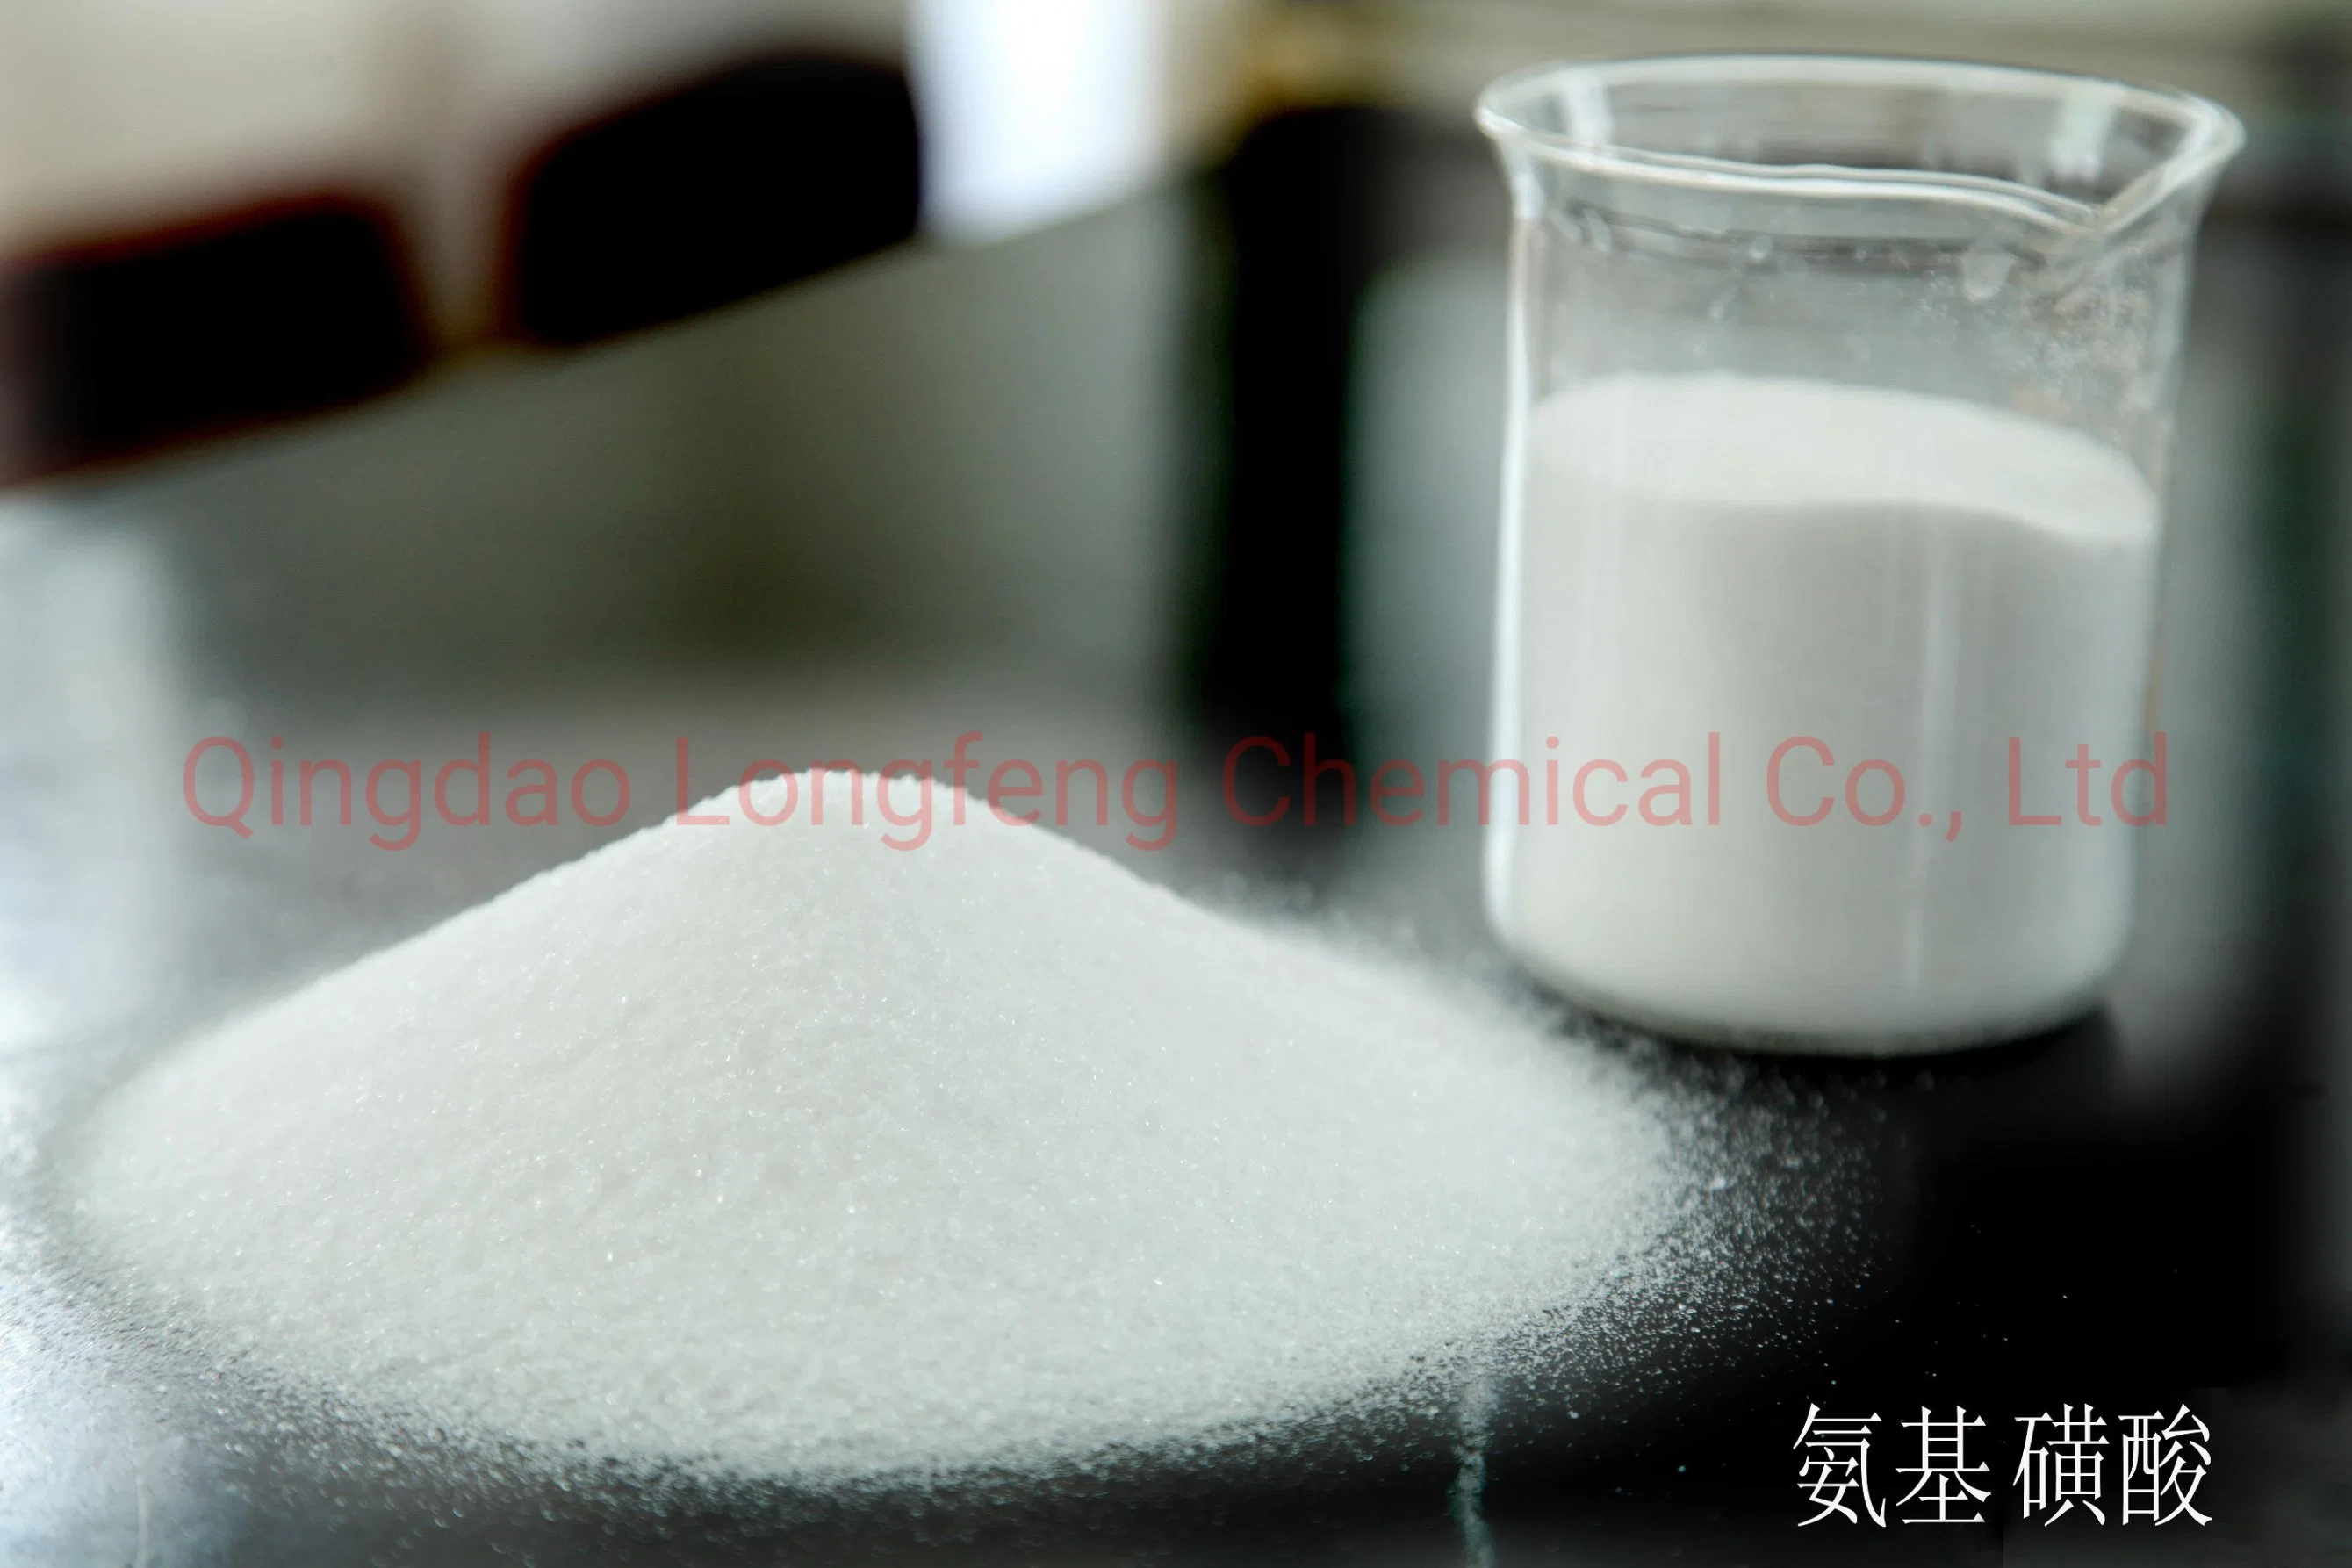 Reach Certificate Inorganic Acid 99.8% Metal Cleaner Sulfamic Acid Amidosulfonic Acid